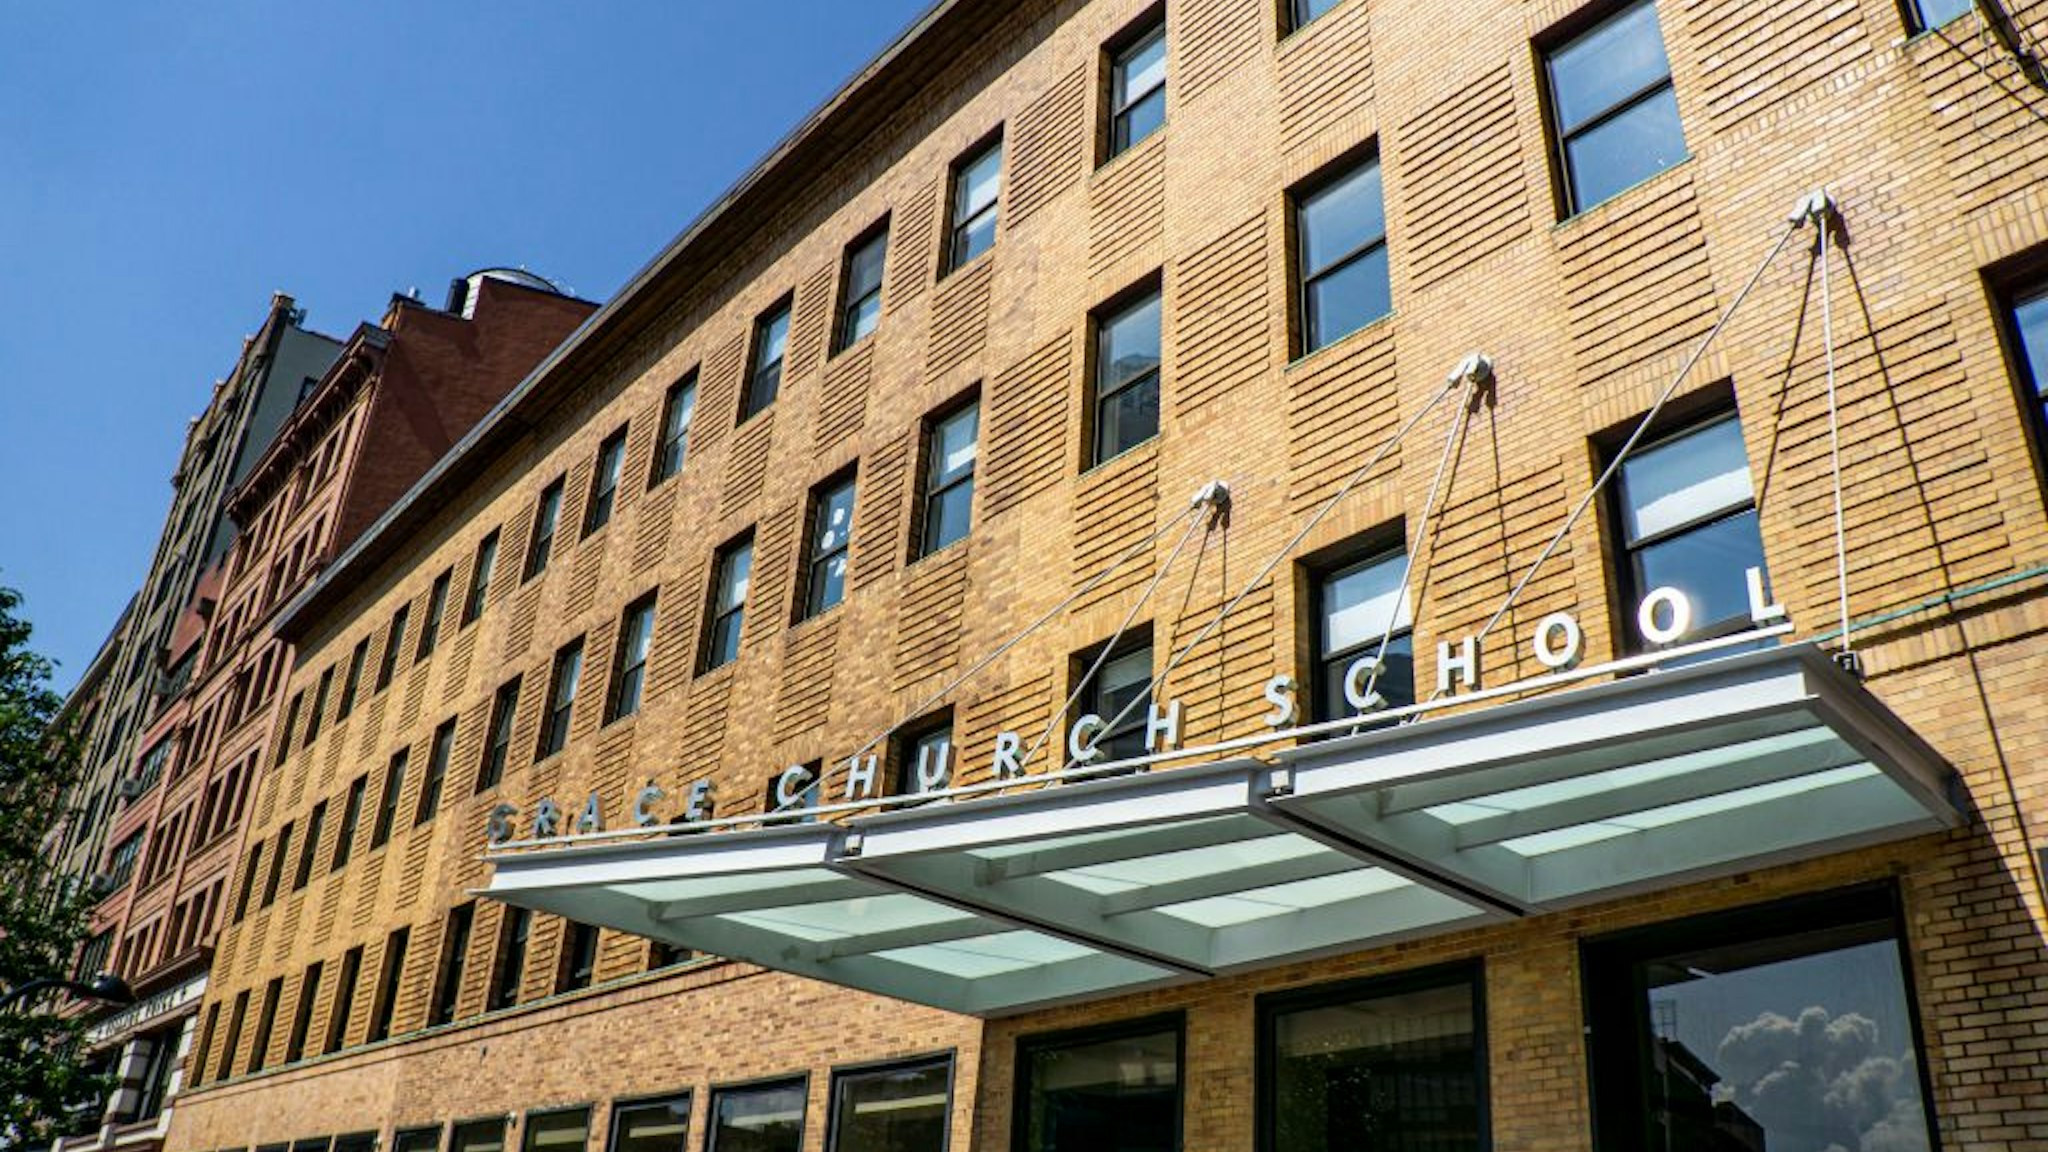 Grace Church High School, Exterior Facade, 46 Cooper Square, New York City, New York, USA.